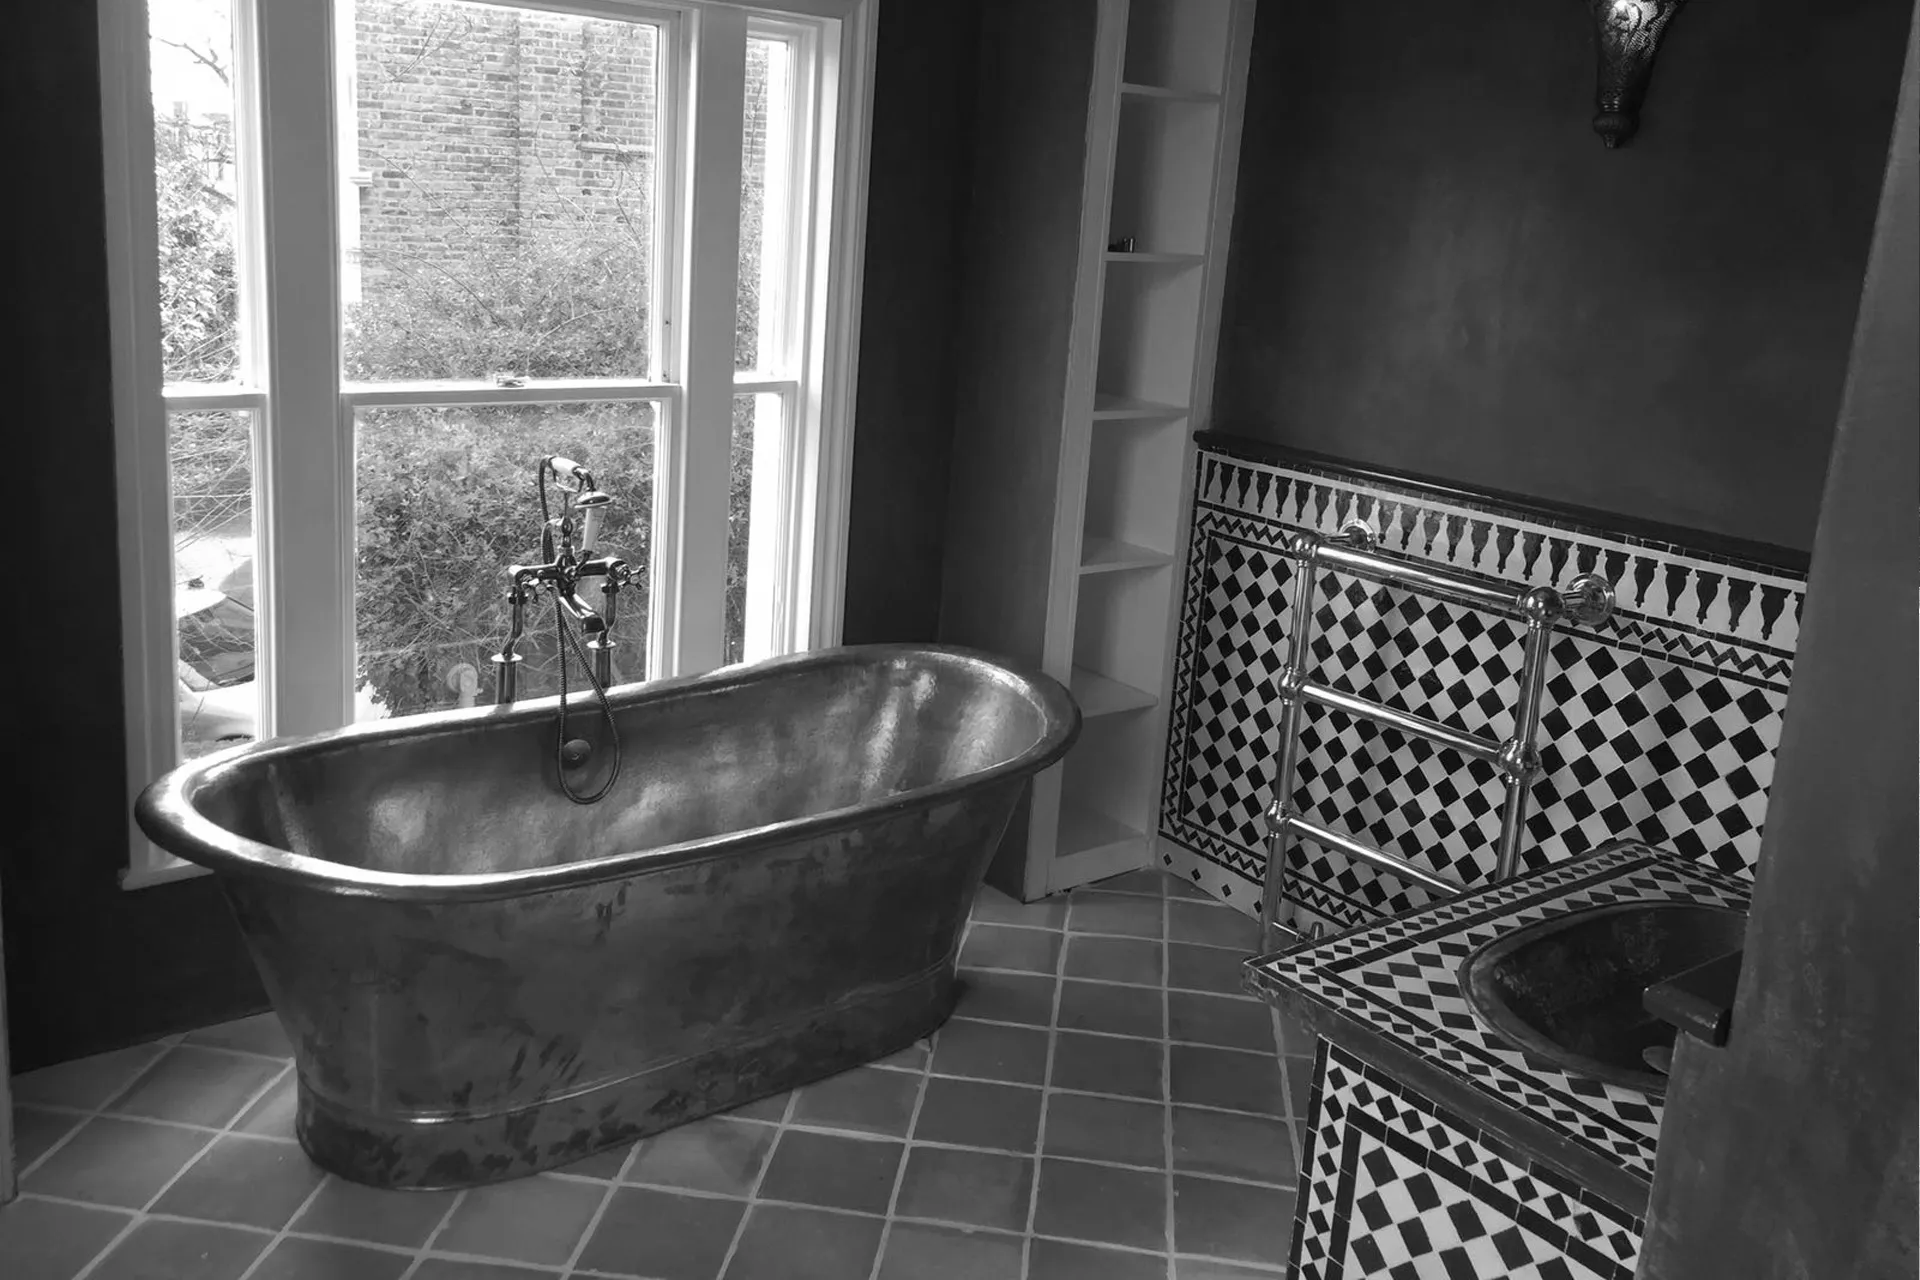 a black and white photo of a bathtub in a bathroom